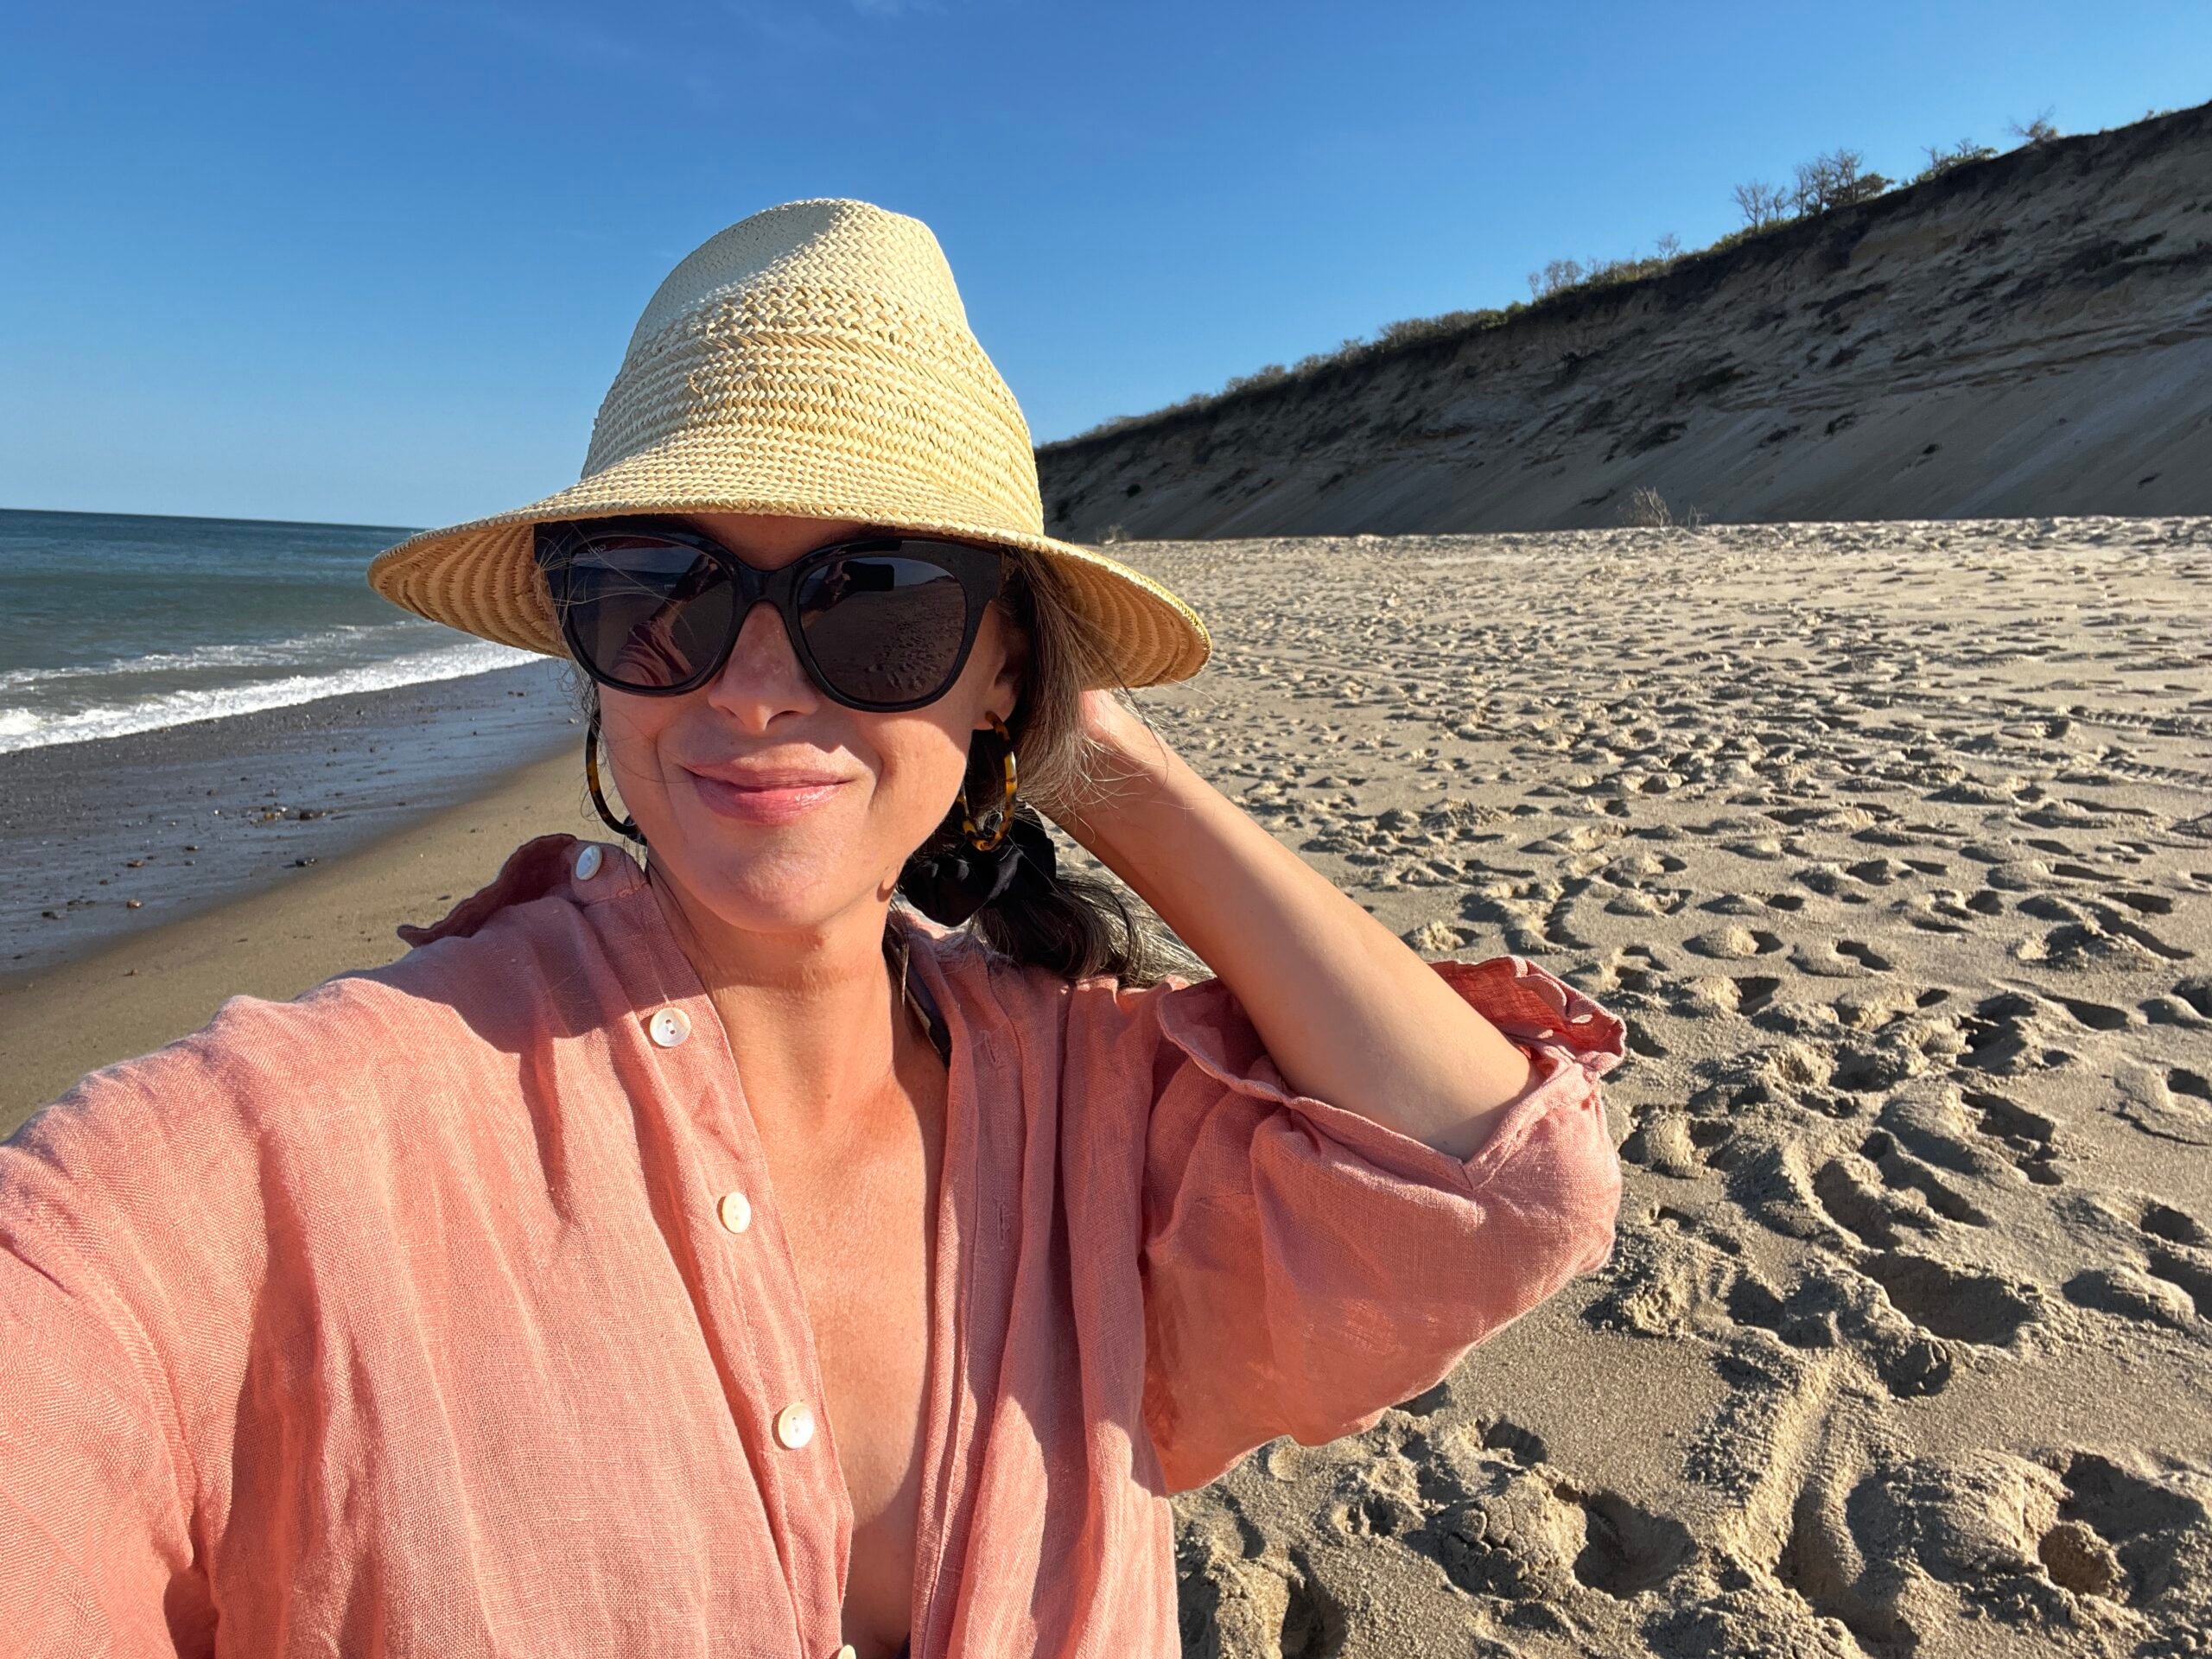 A woman walks on the beach wearing a sun hat.